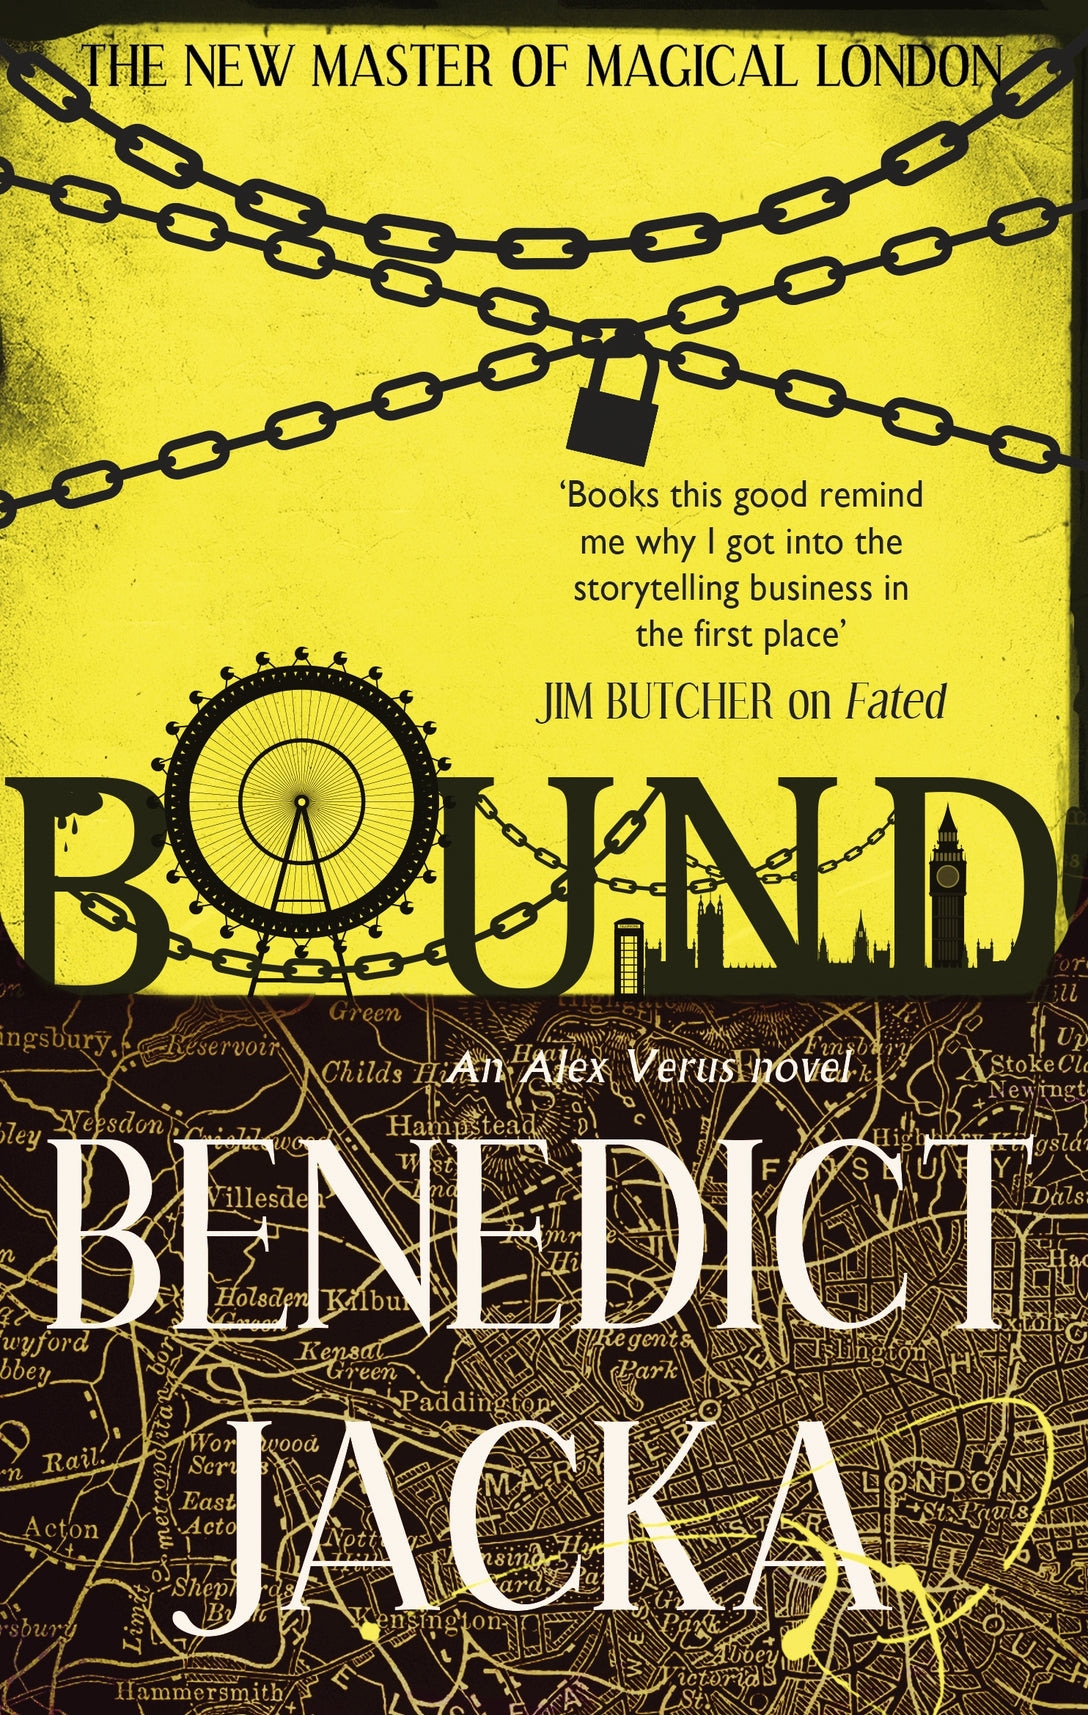 Bound by Benedict Jacka